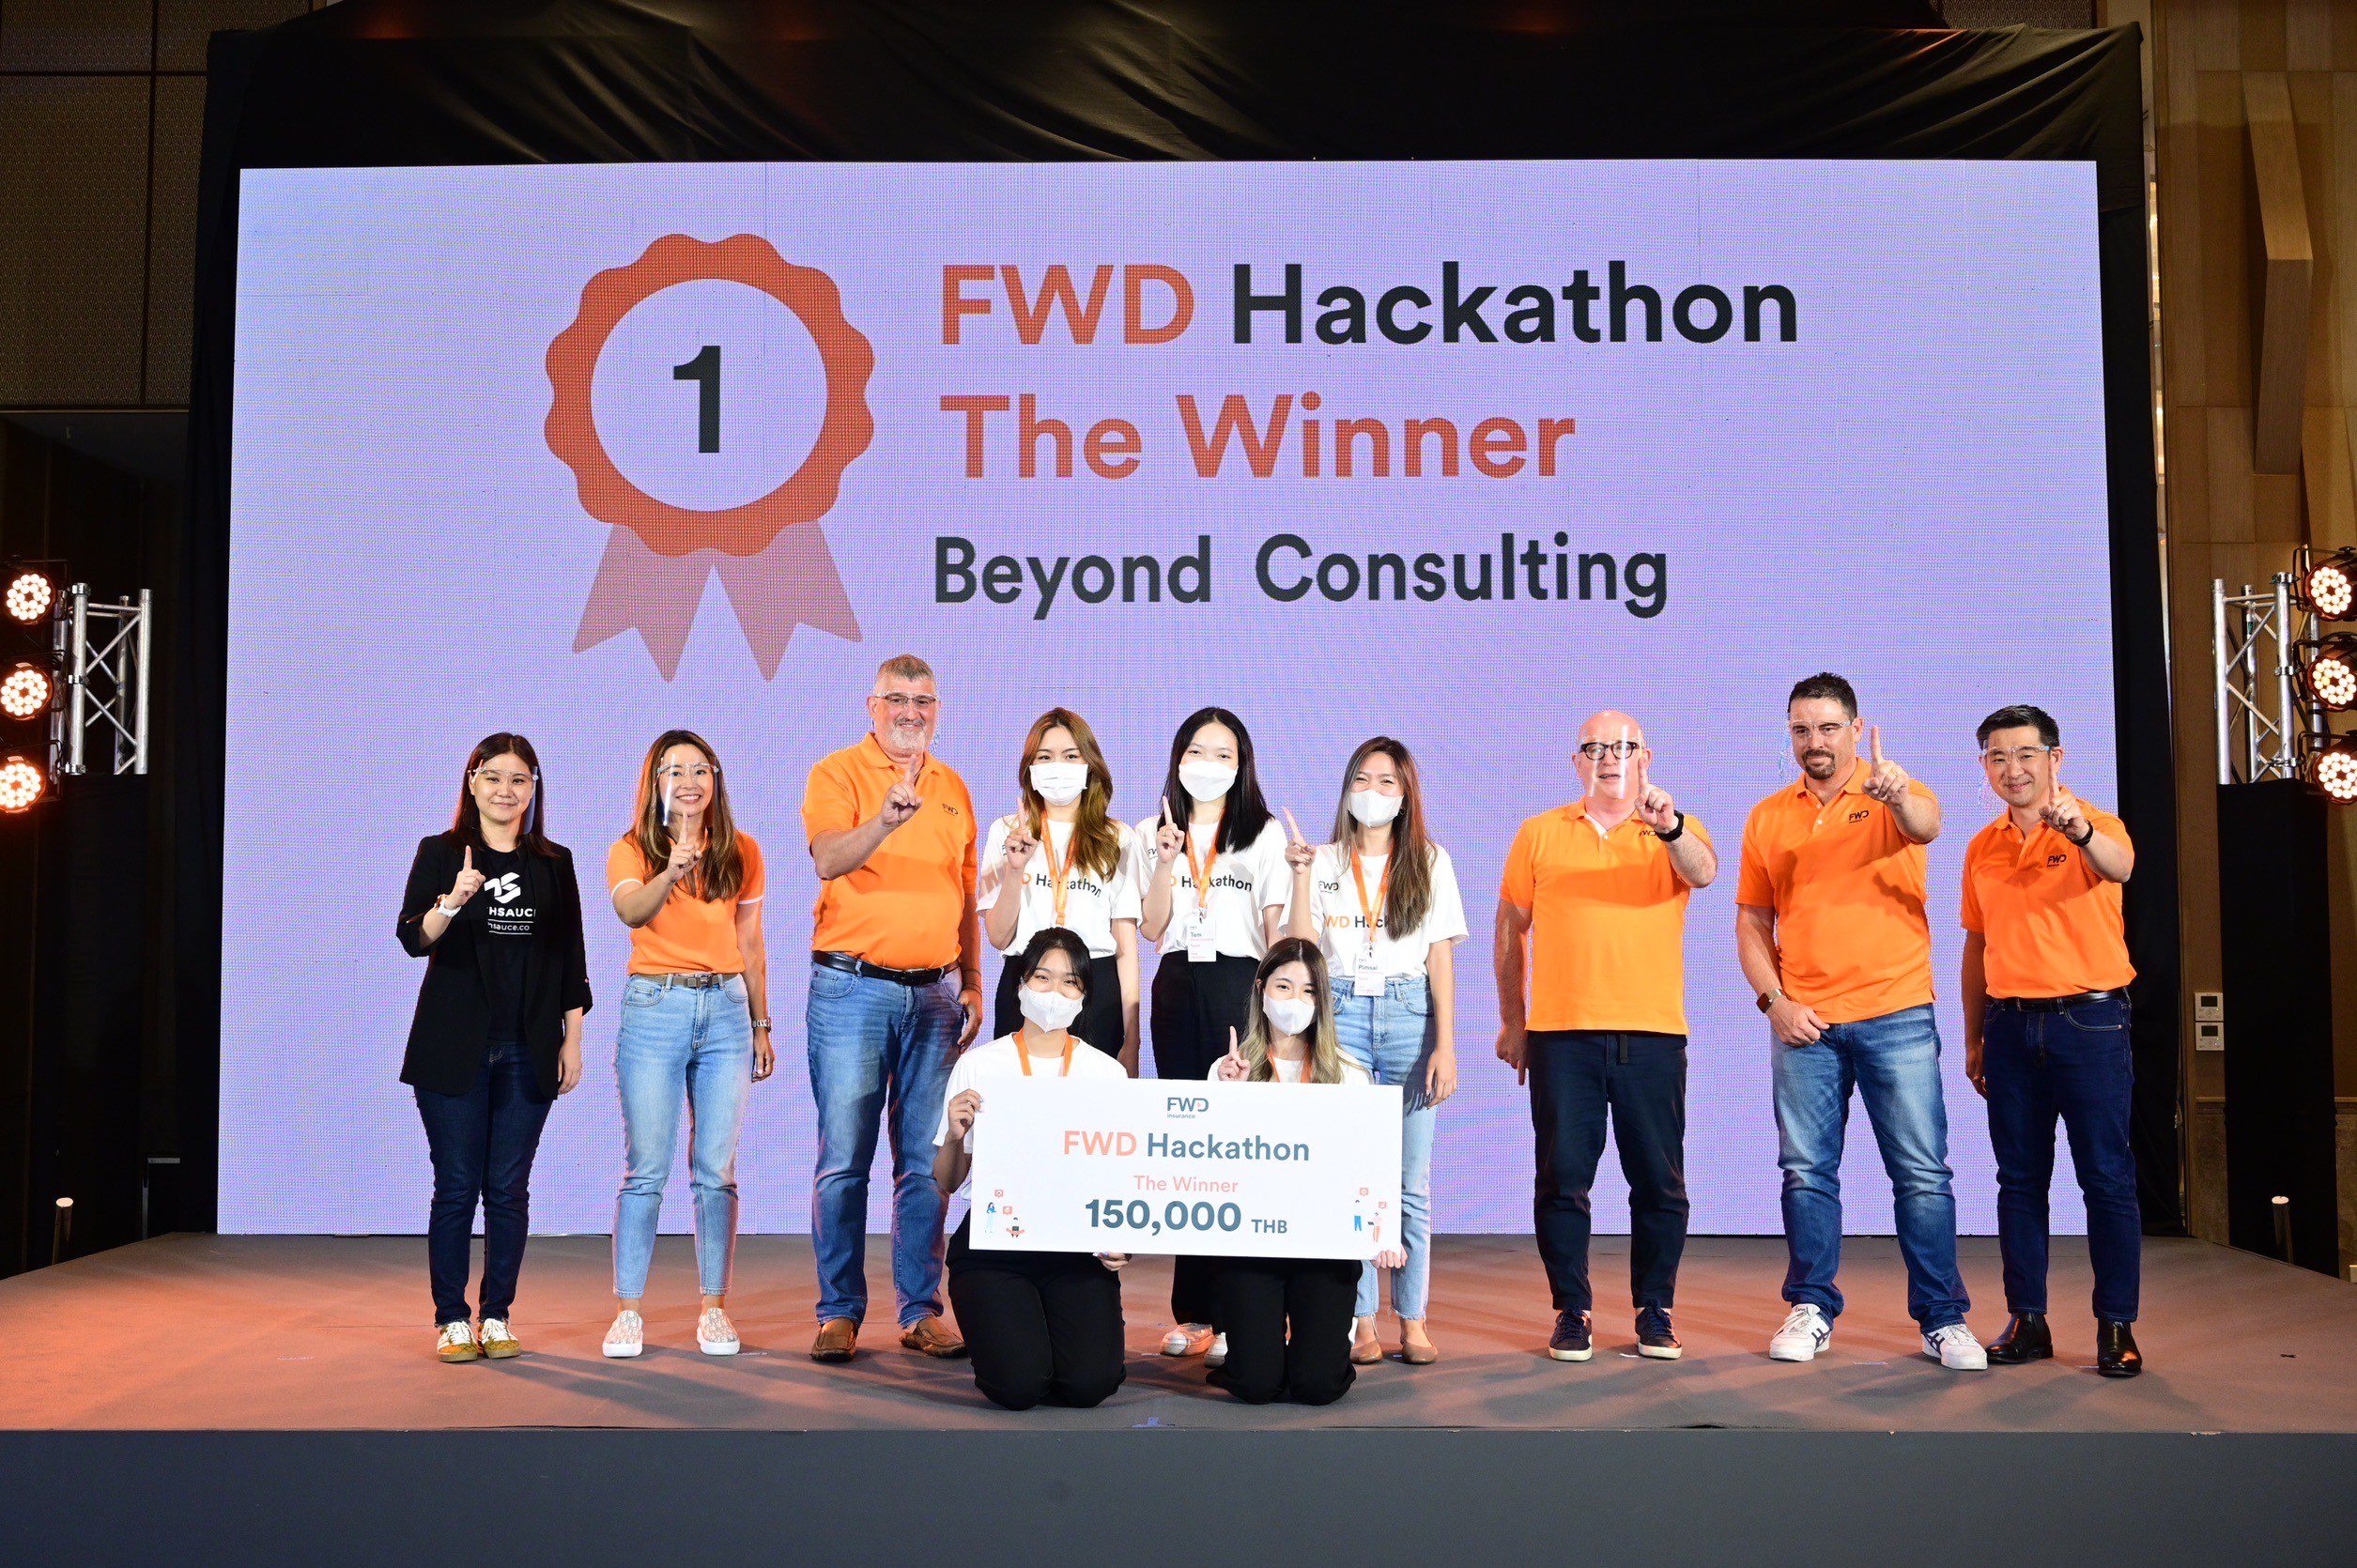 FWD ประกันชีวิต มอบรางวัลผู้ชนะเลิศ โครงการ ‘FWD Hackathon’ สร้างสรรค์นวัตกรรมที่แตกต่างภายใต้แนวคิด “การเปลี่ยนมุมมองของผู้คนที่มีต่อการประกันชีวิต”